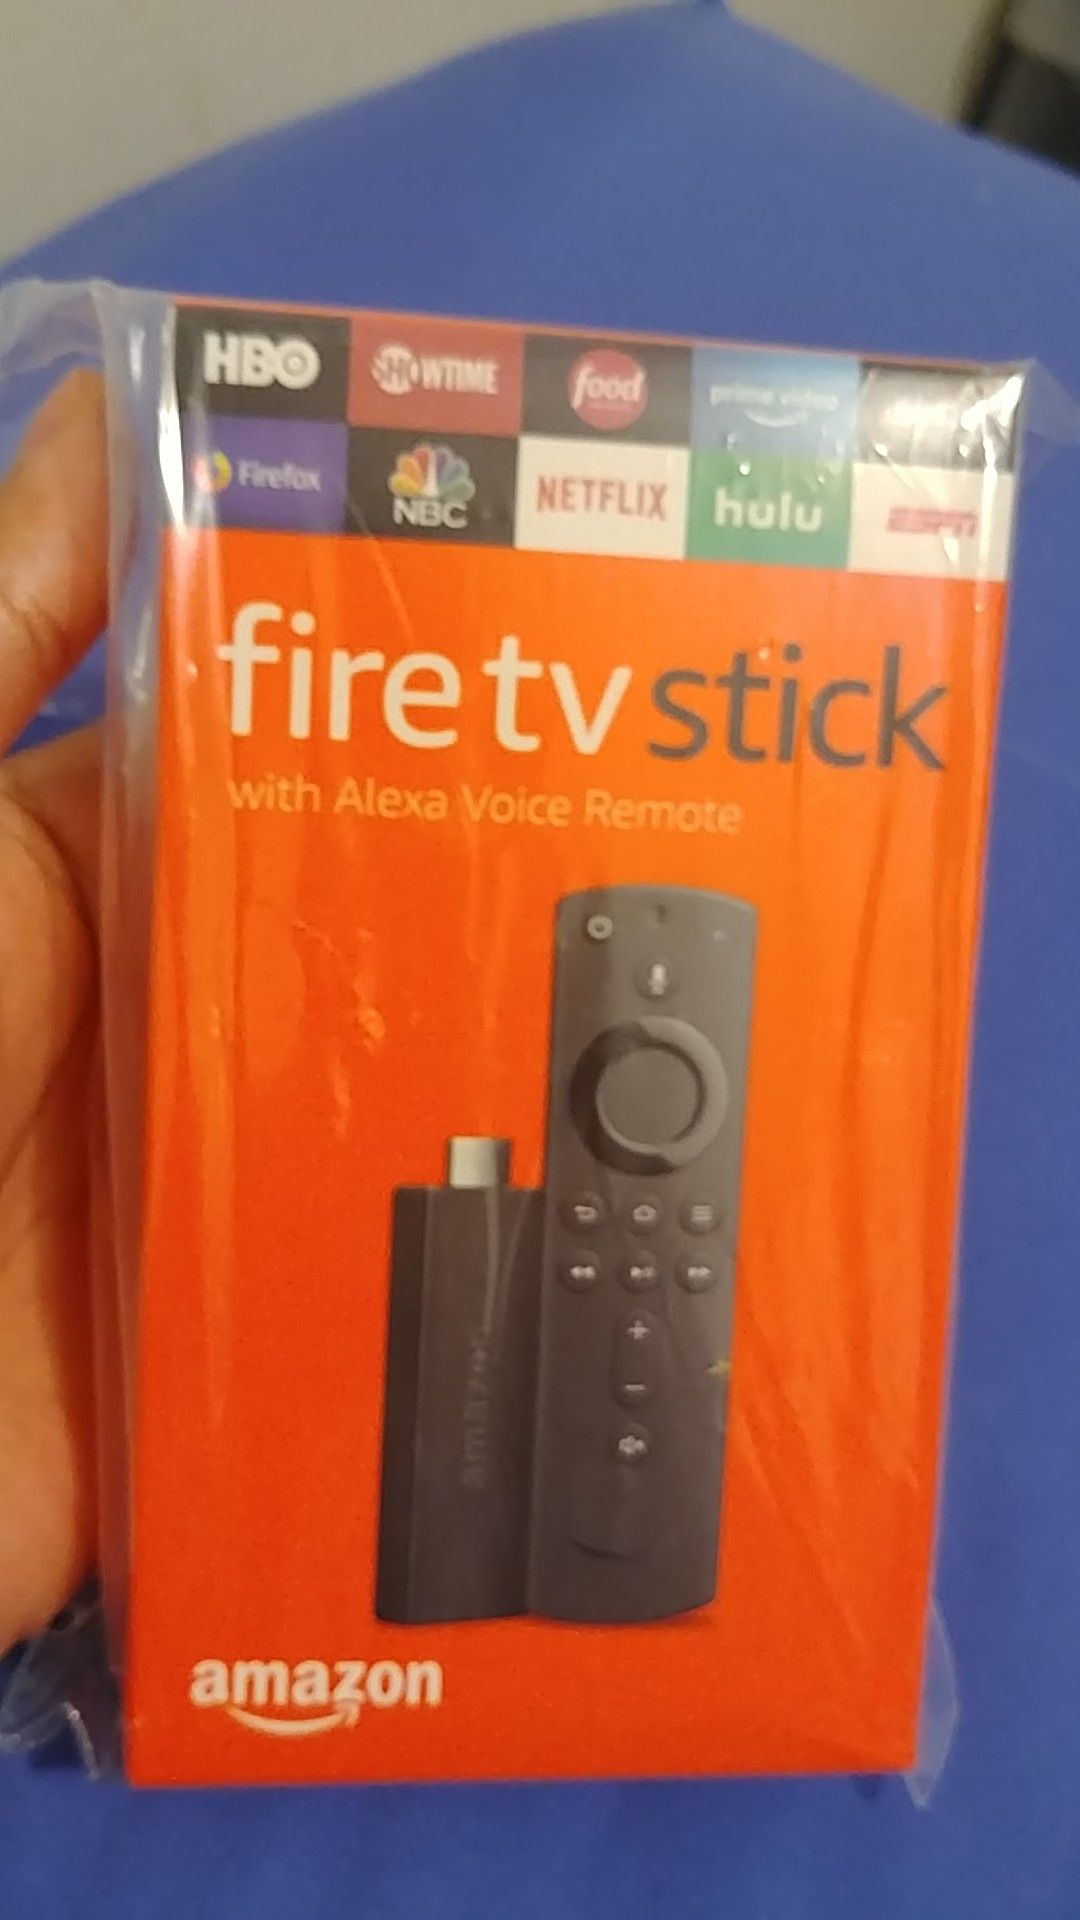 Amazon fire tv stick